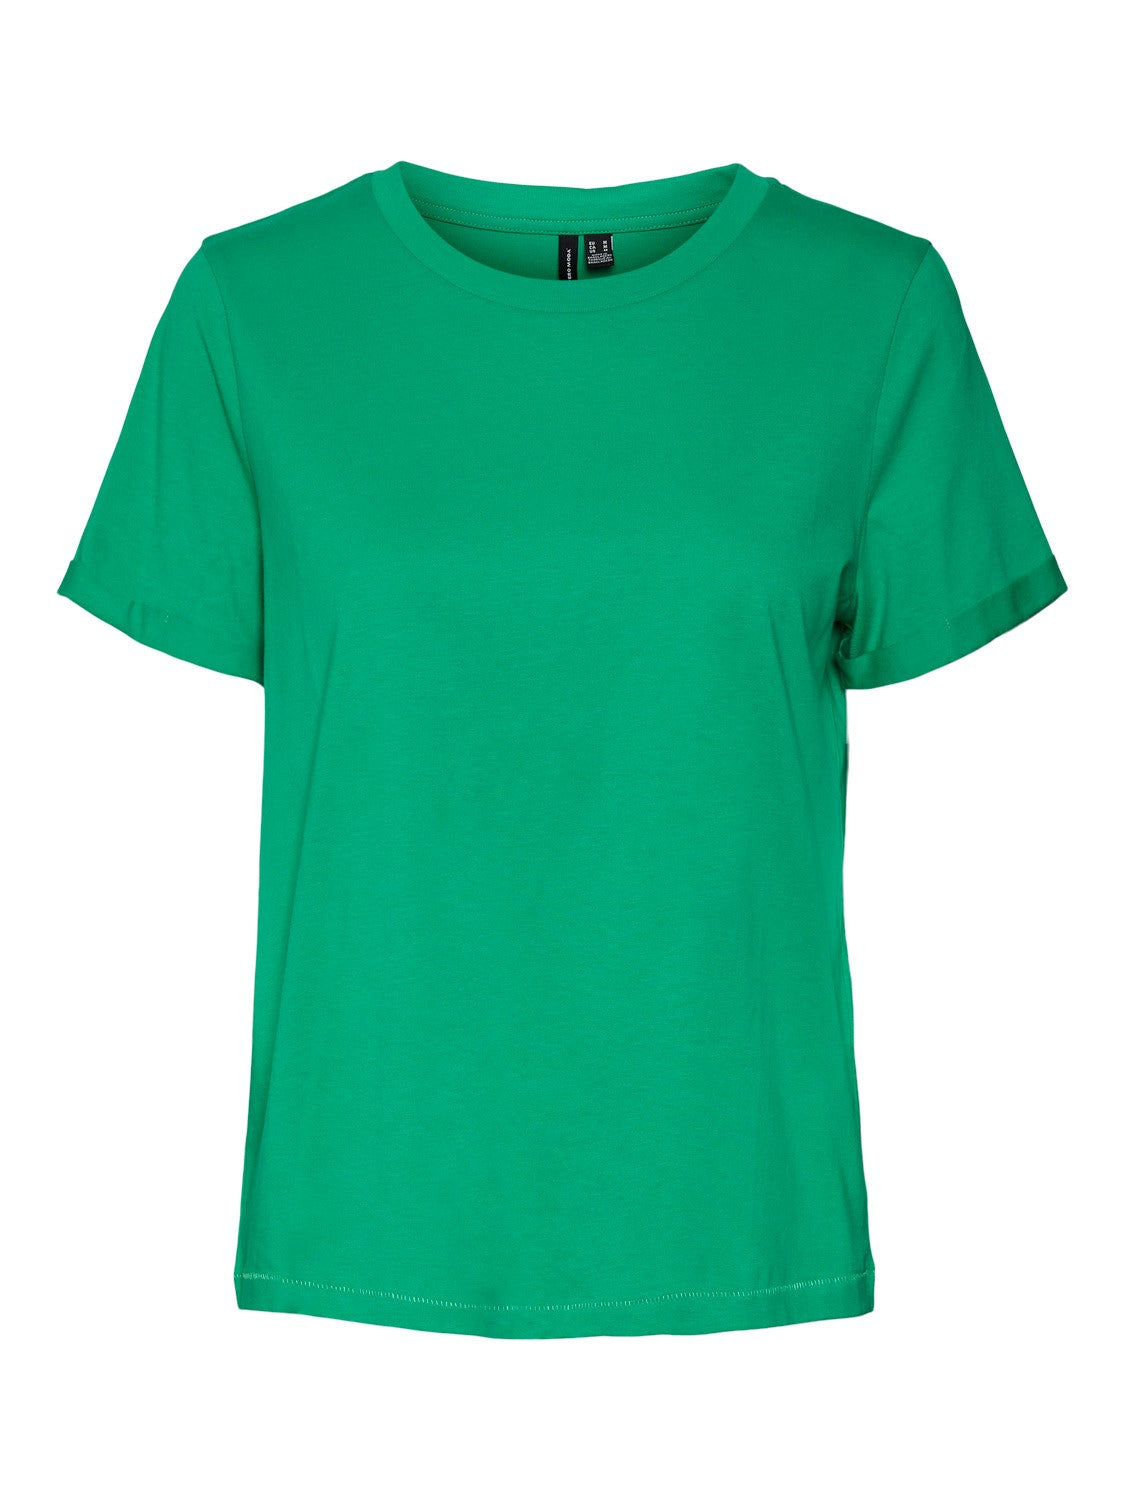 Paula 100% Cotton T-Shirt - Bright Green